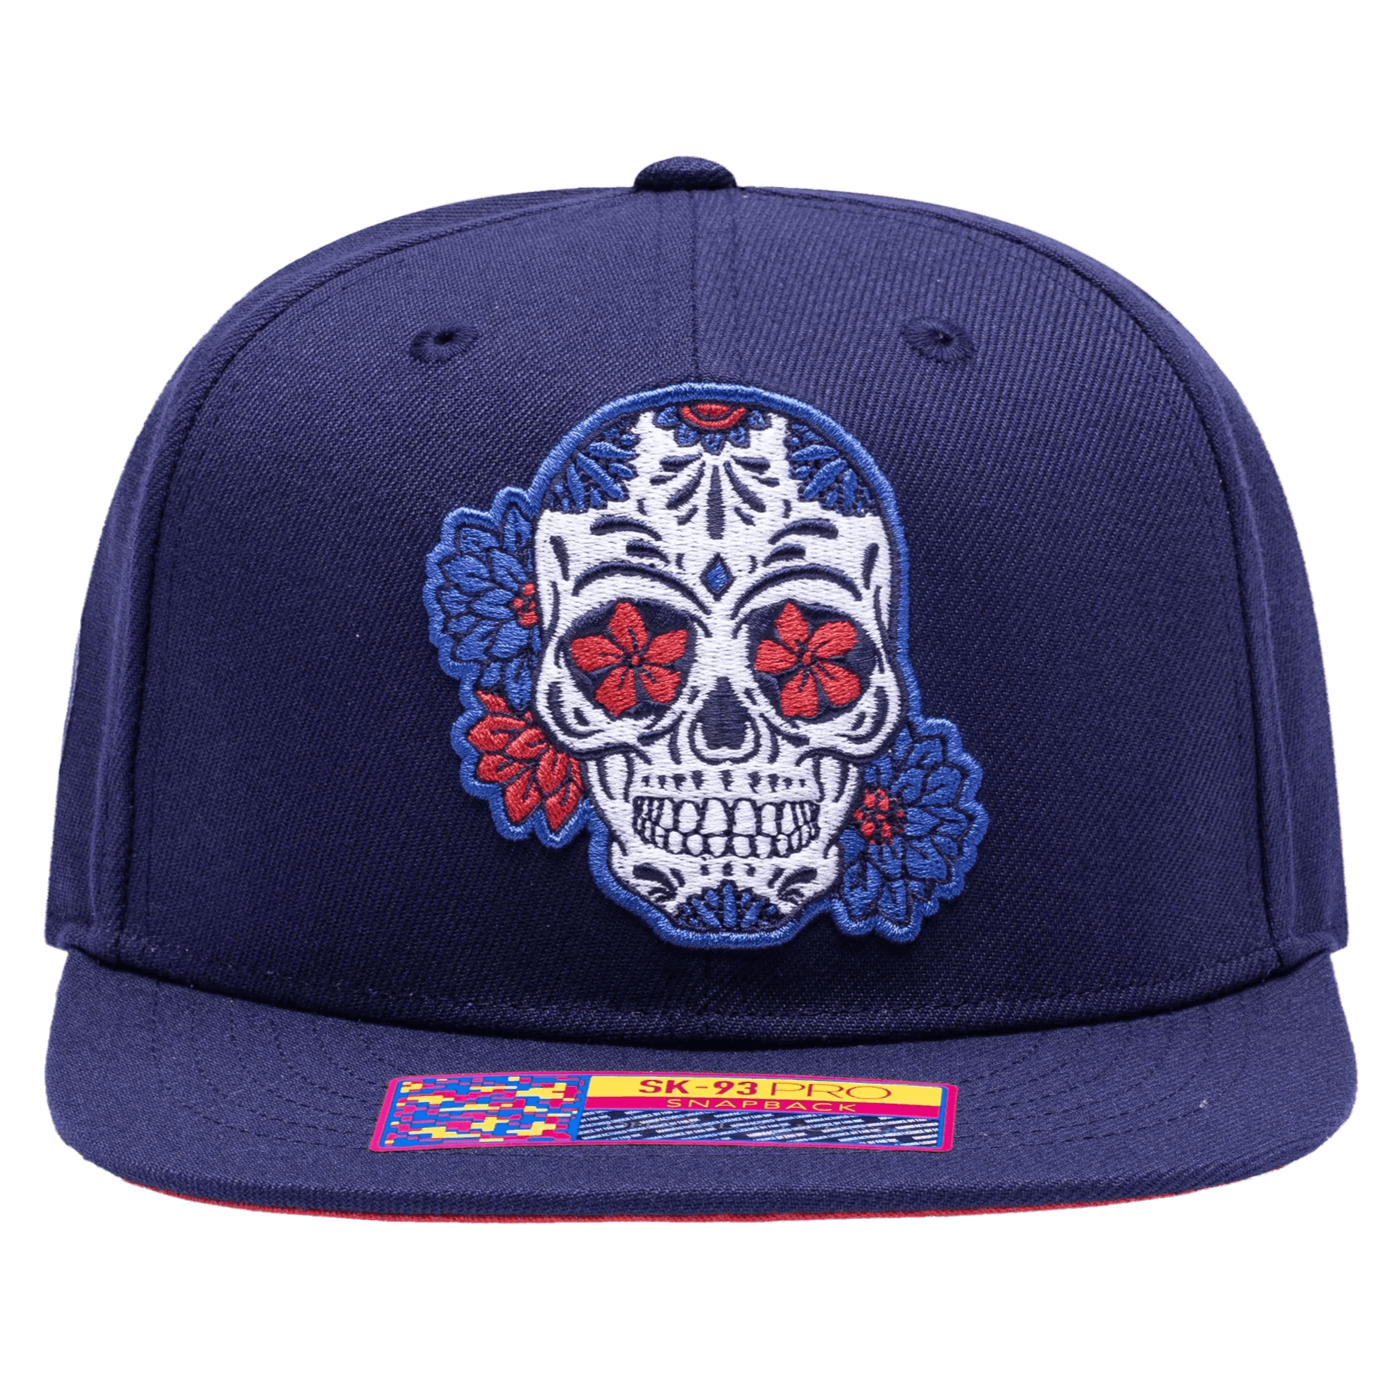 FI Collection Cruz Azul Me Da Mi Calaverita Snapchat Hat (Front)